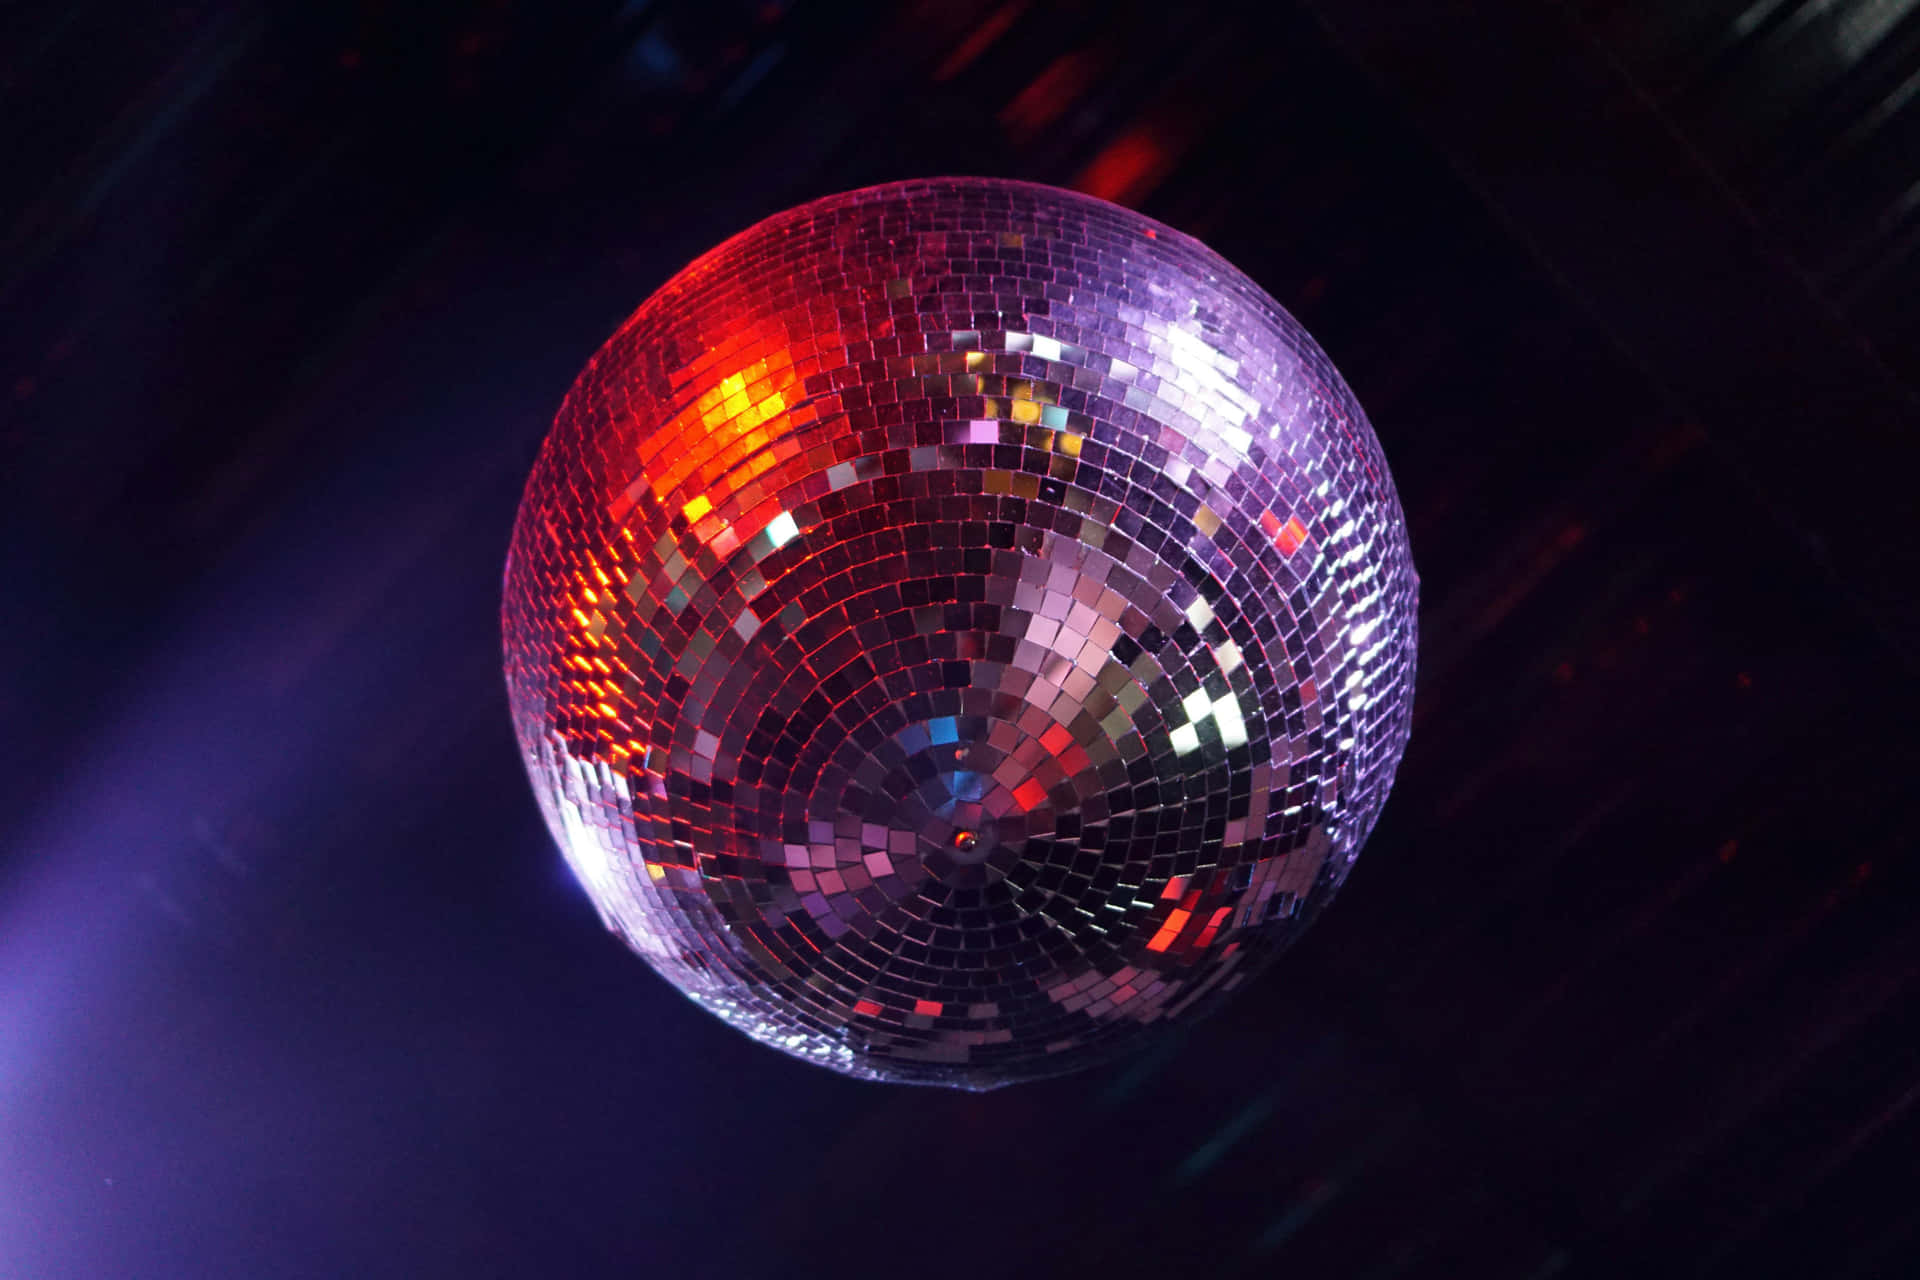 Glowing Disco Ball Nightlife.jpg